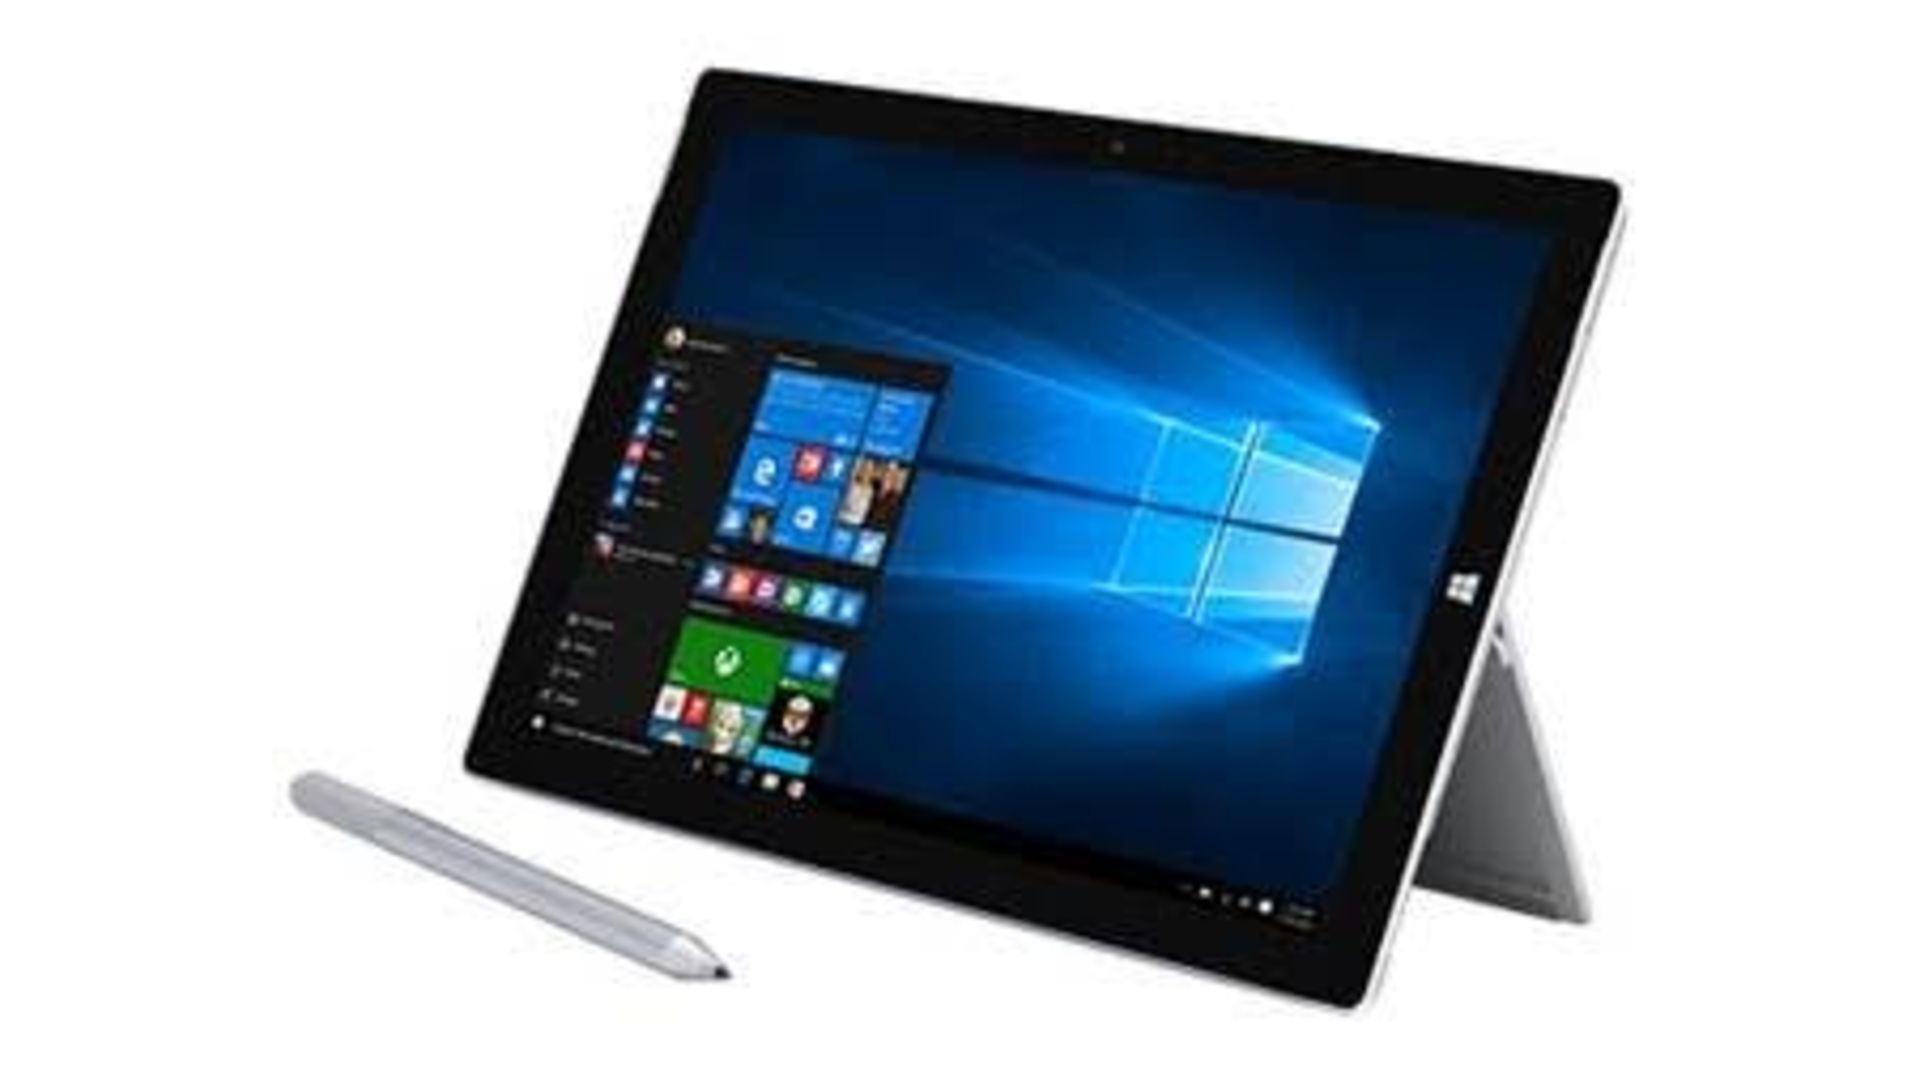 V Grade A Microsoft Surface Pro 3 12" With Core i5 - 4GB RAM - 128GB SSD - Windows 8.1 - Includes